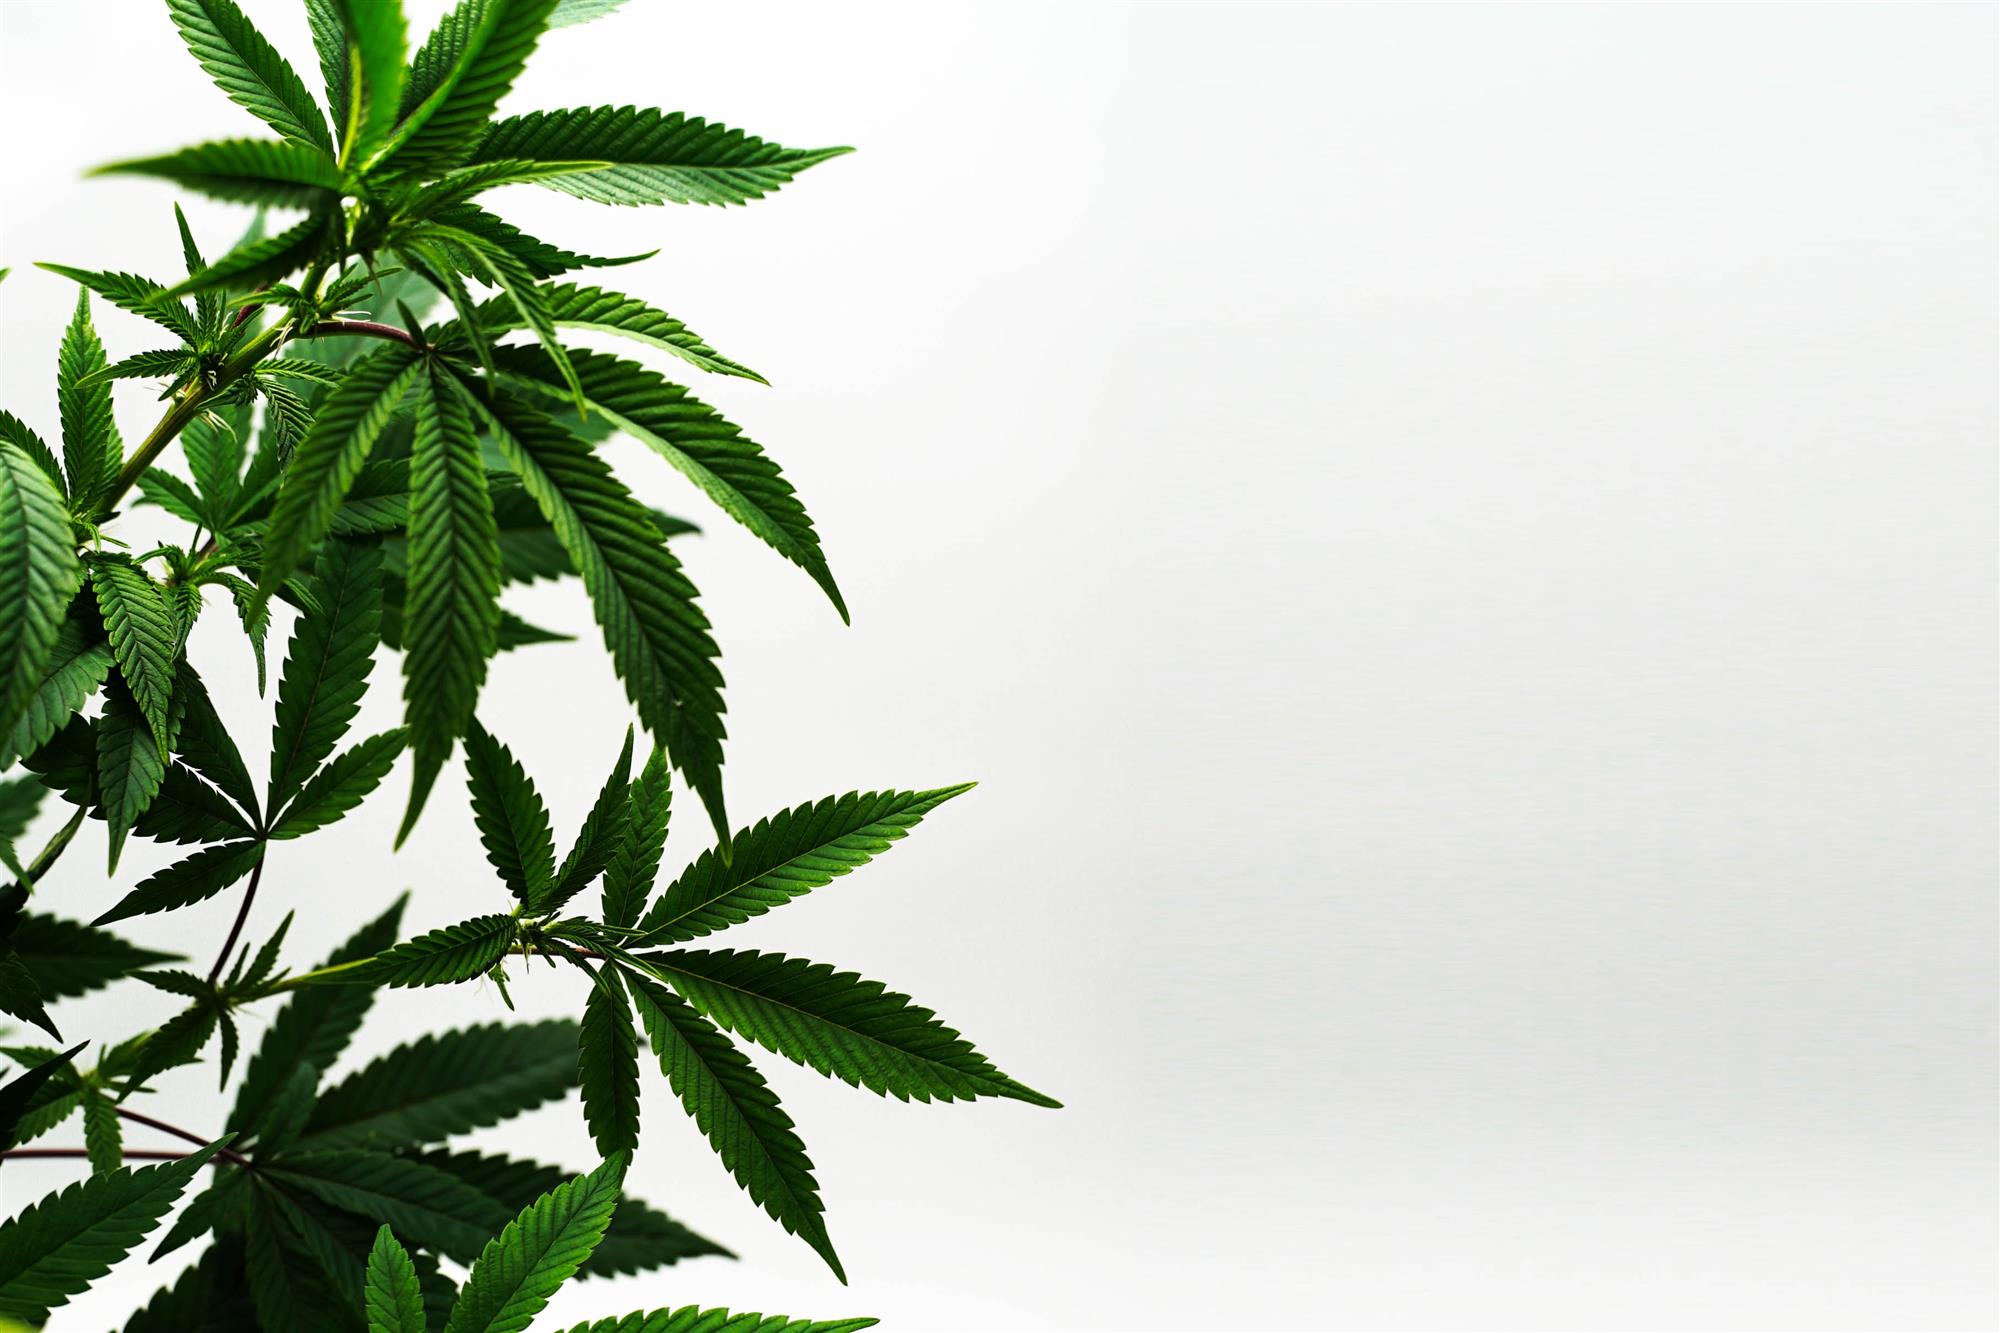 Health Benefits of Cannabis and Marijuana